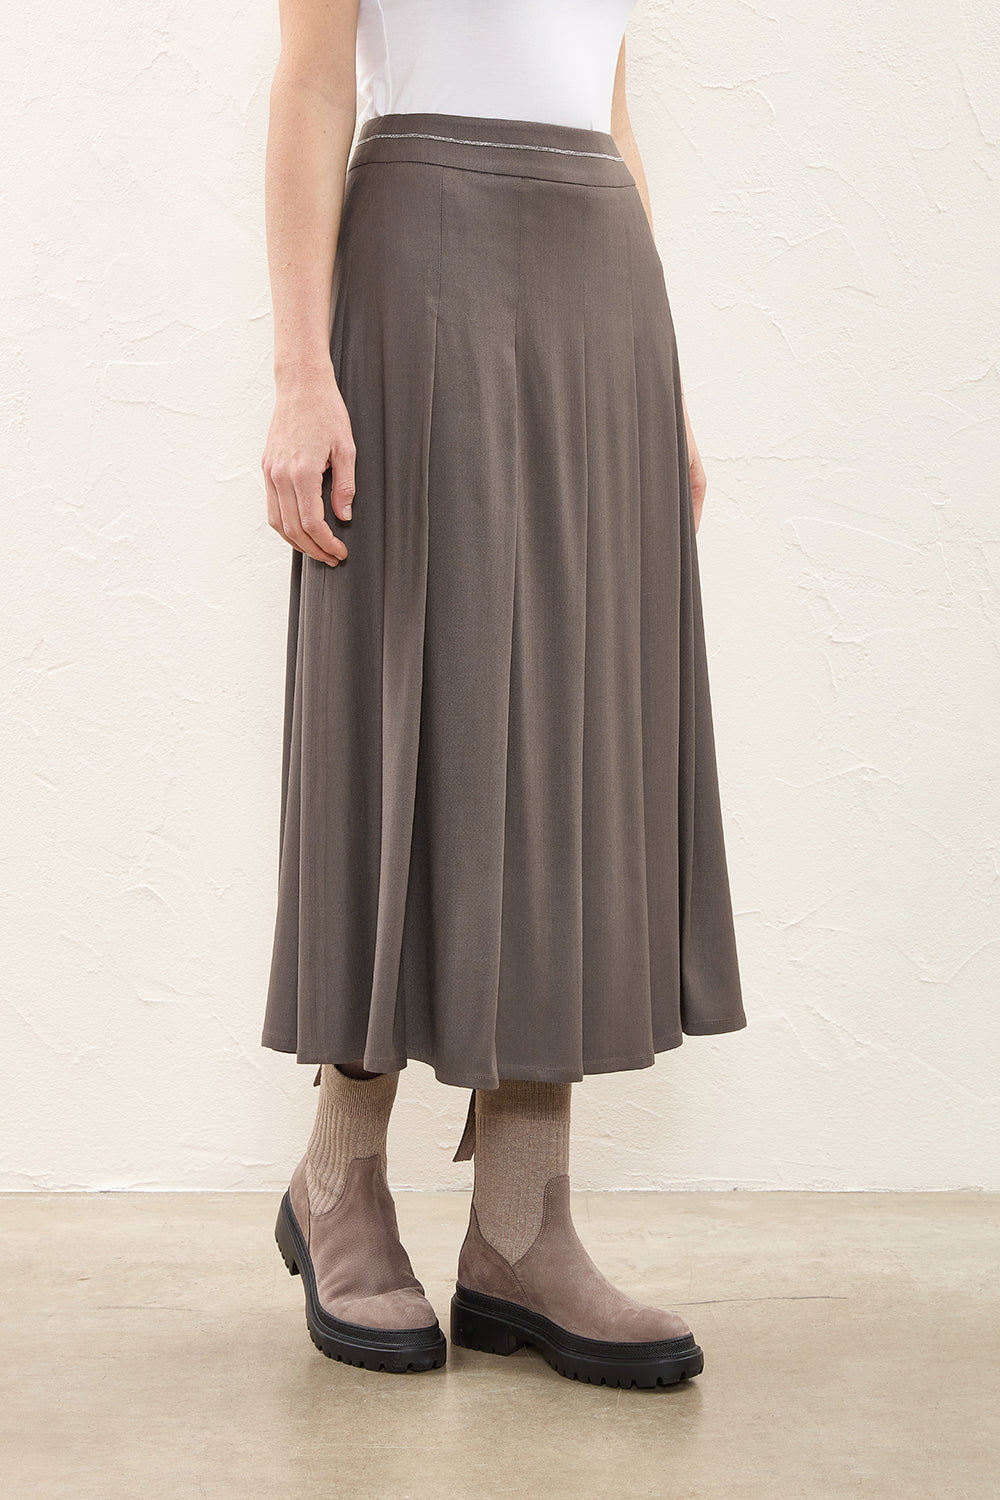 bronze of riace long skirt